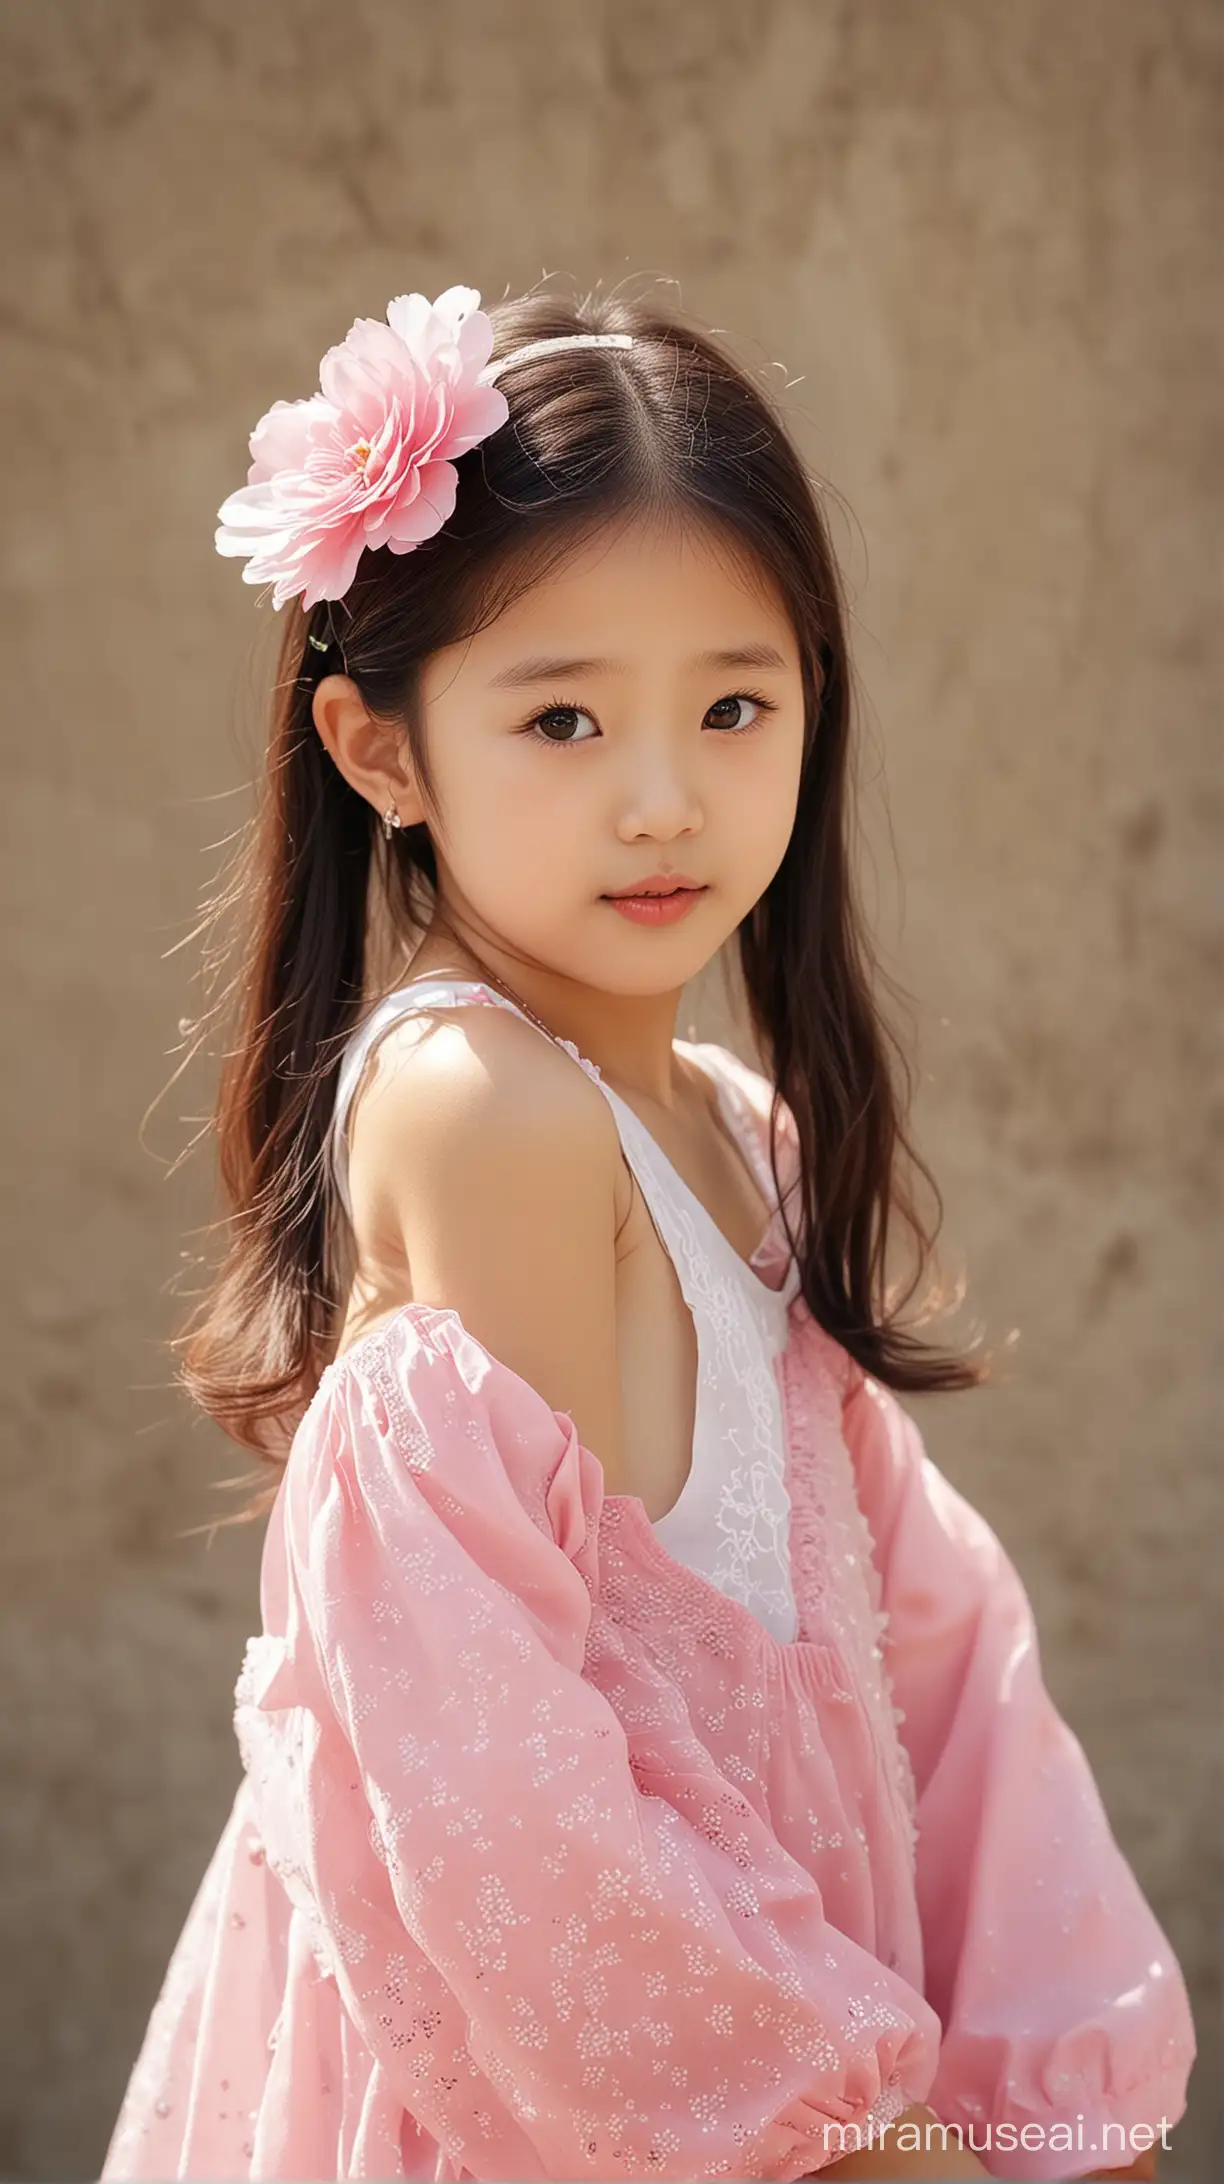 Korean beautiful little girl childhood